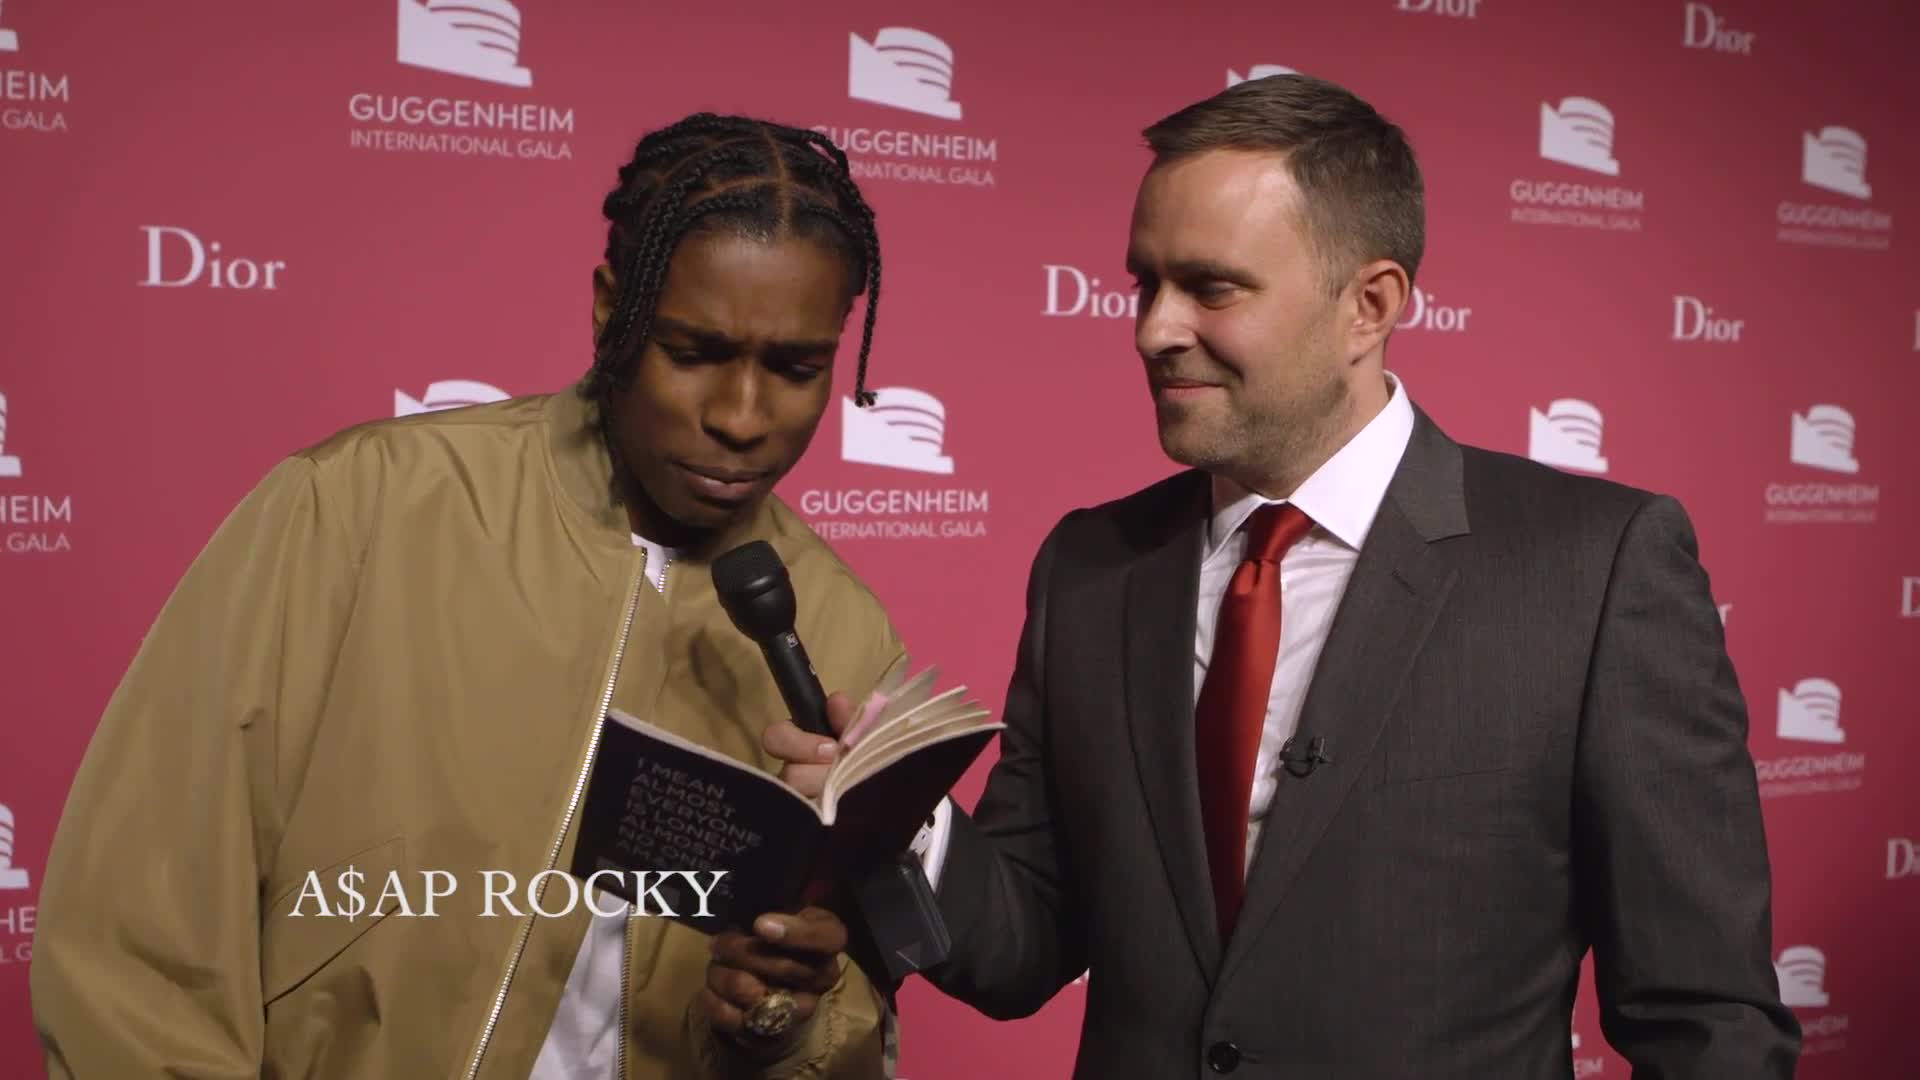 A$AP Rocky's Guggenheim Gala Photo Diary